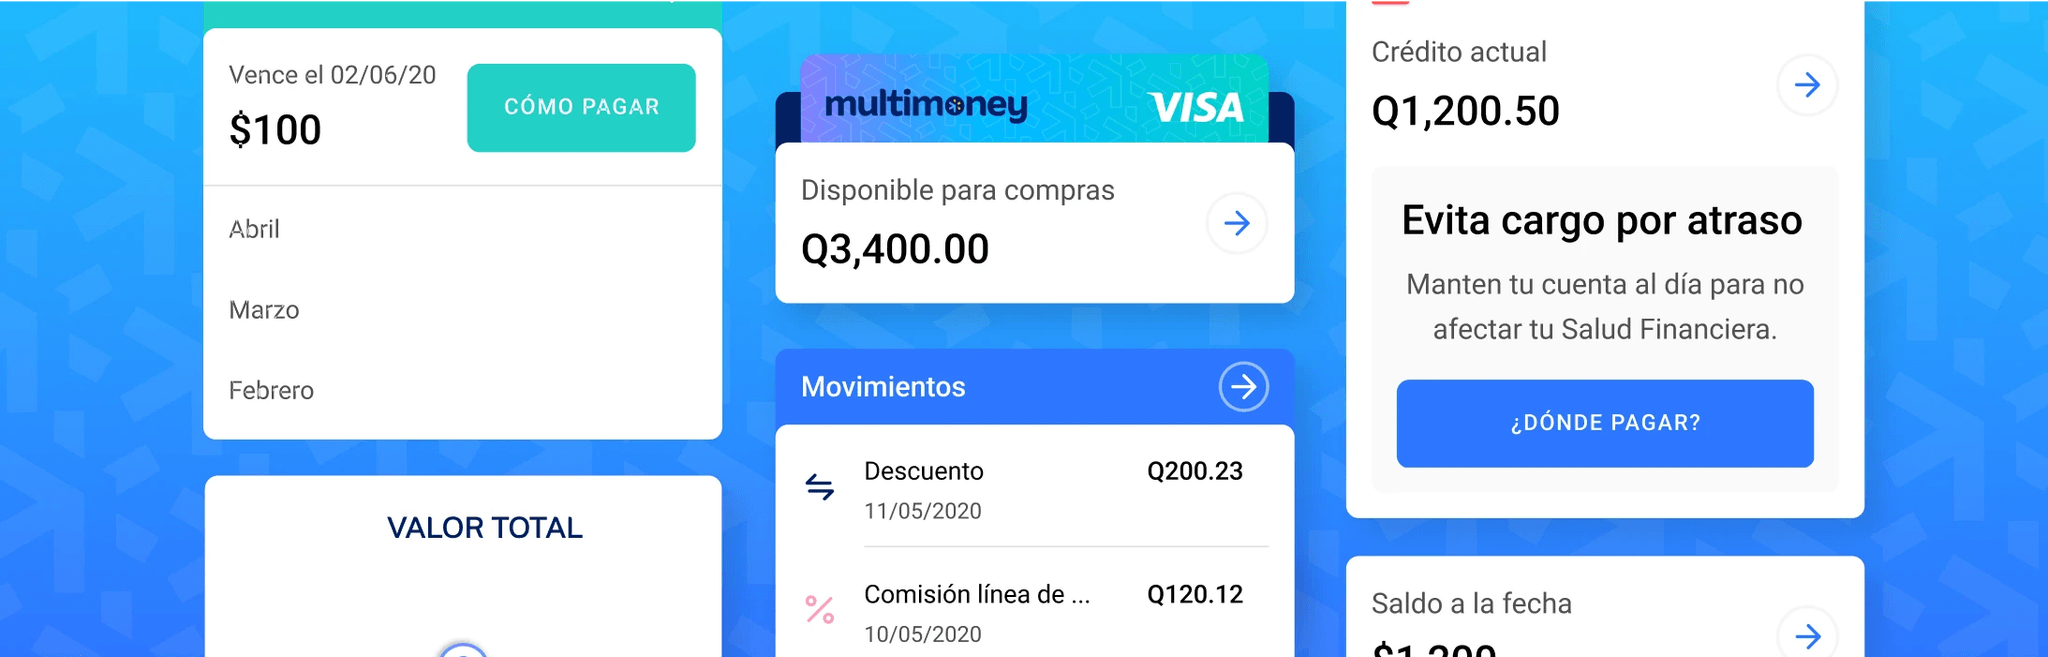 Multimoney product app screenshot